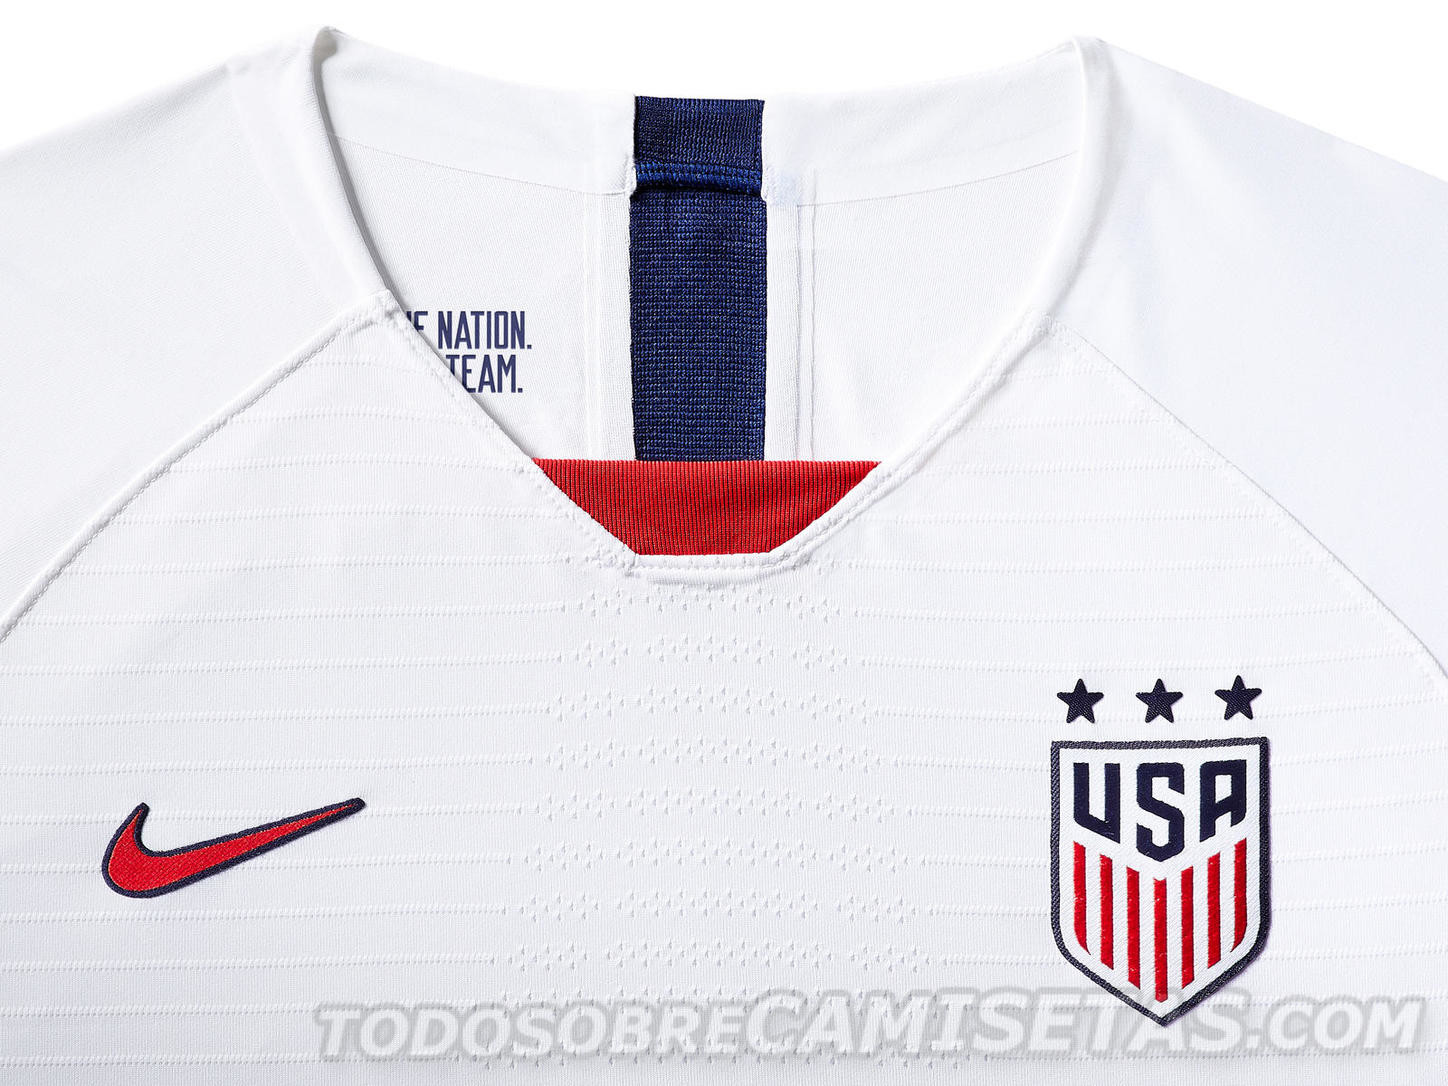 USA 2019 Women’s World Cup Nike Kits